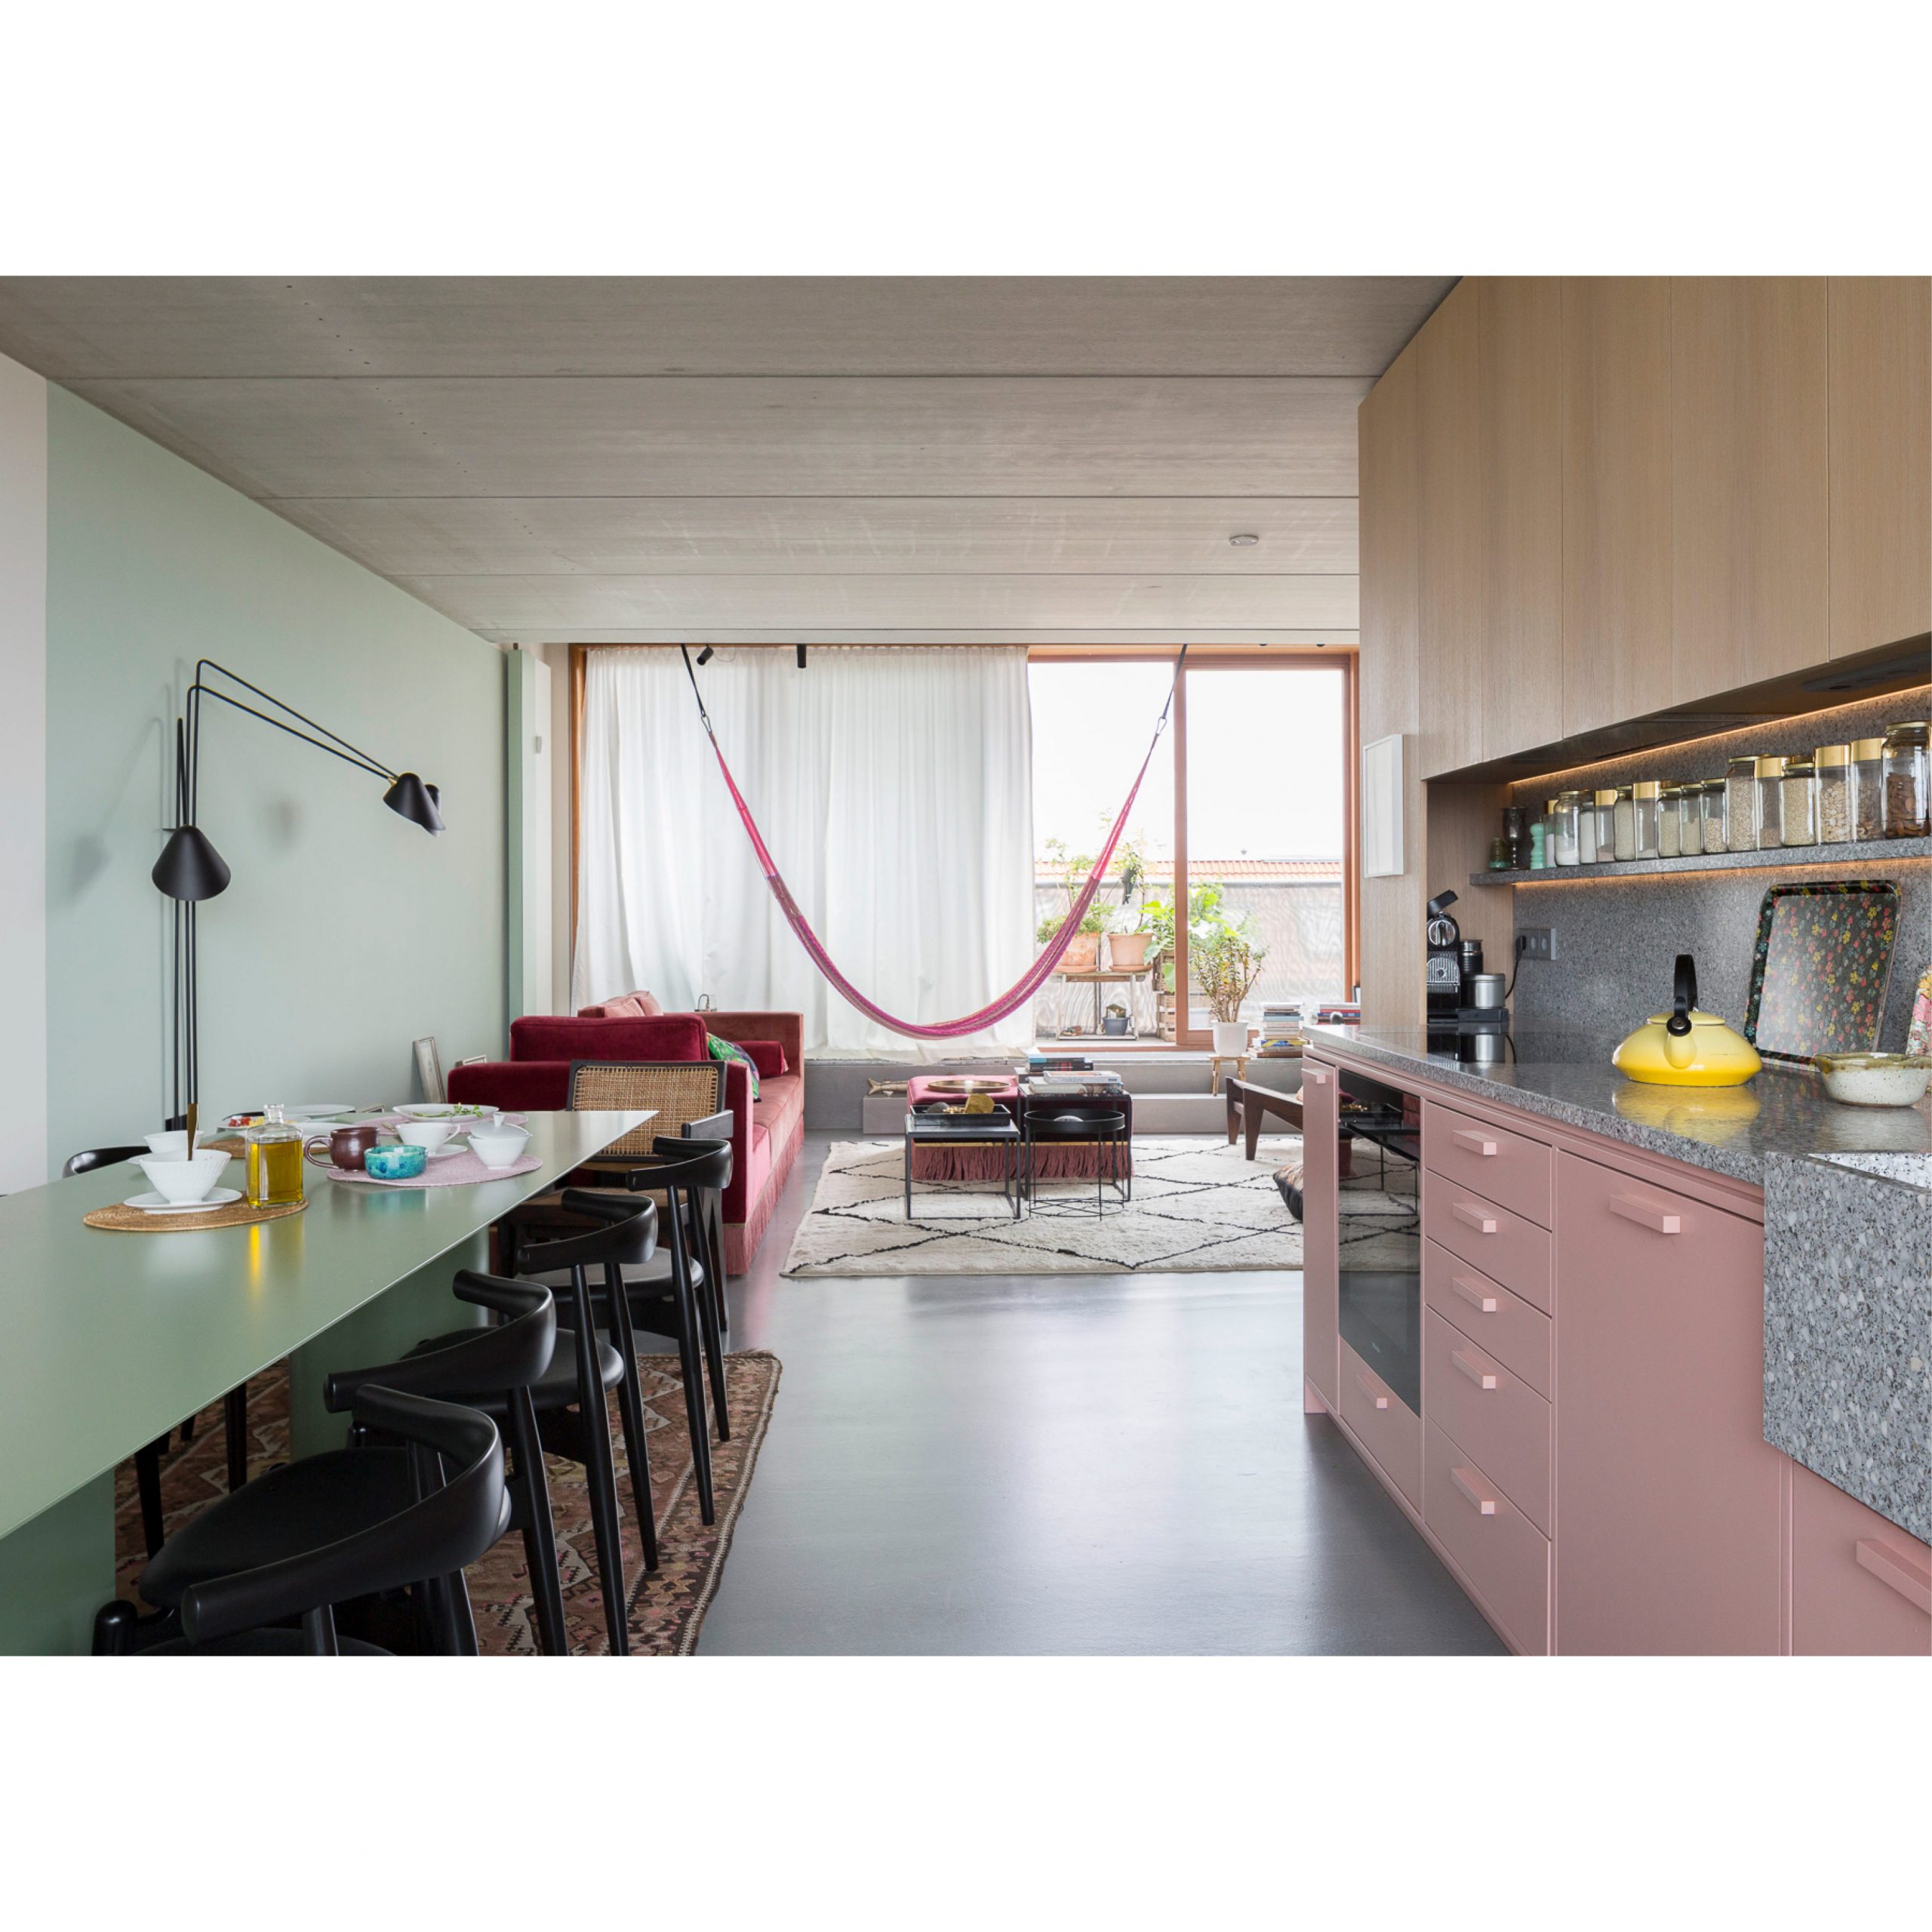 Ester Bruzkus Interior Kitchen ©Caroline Prange_5